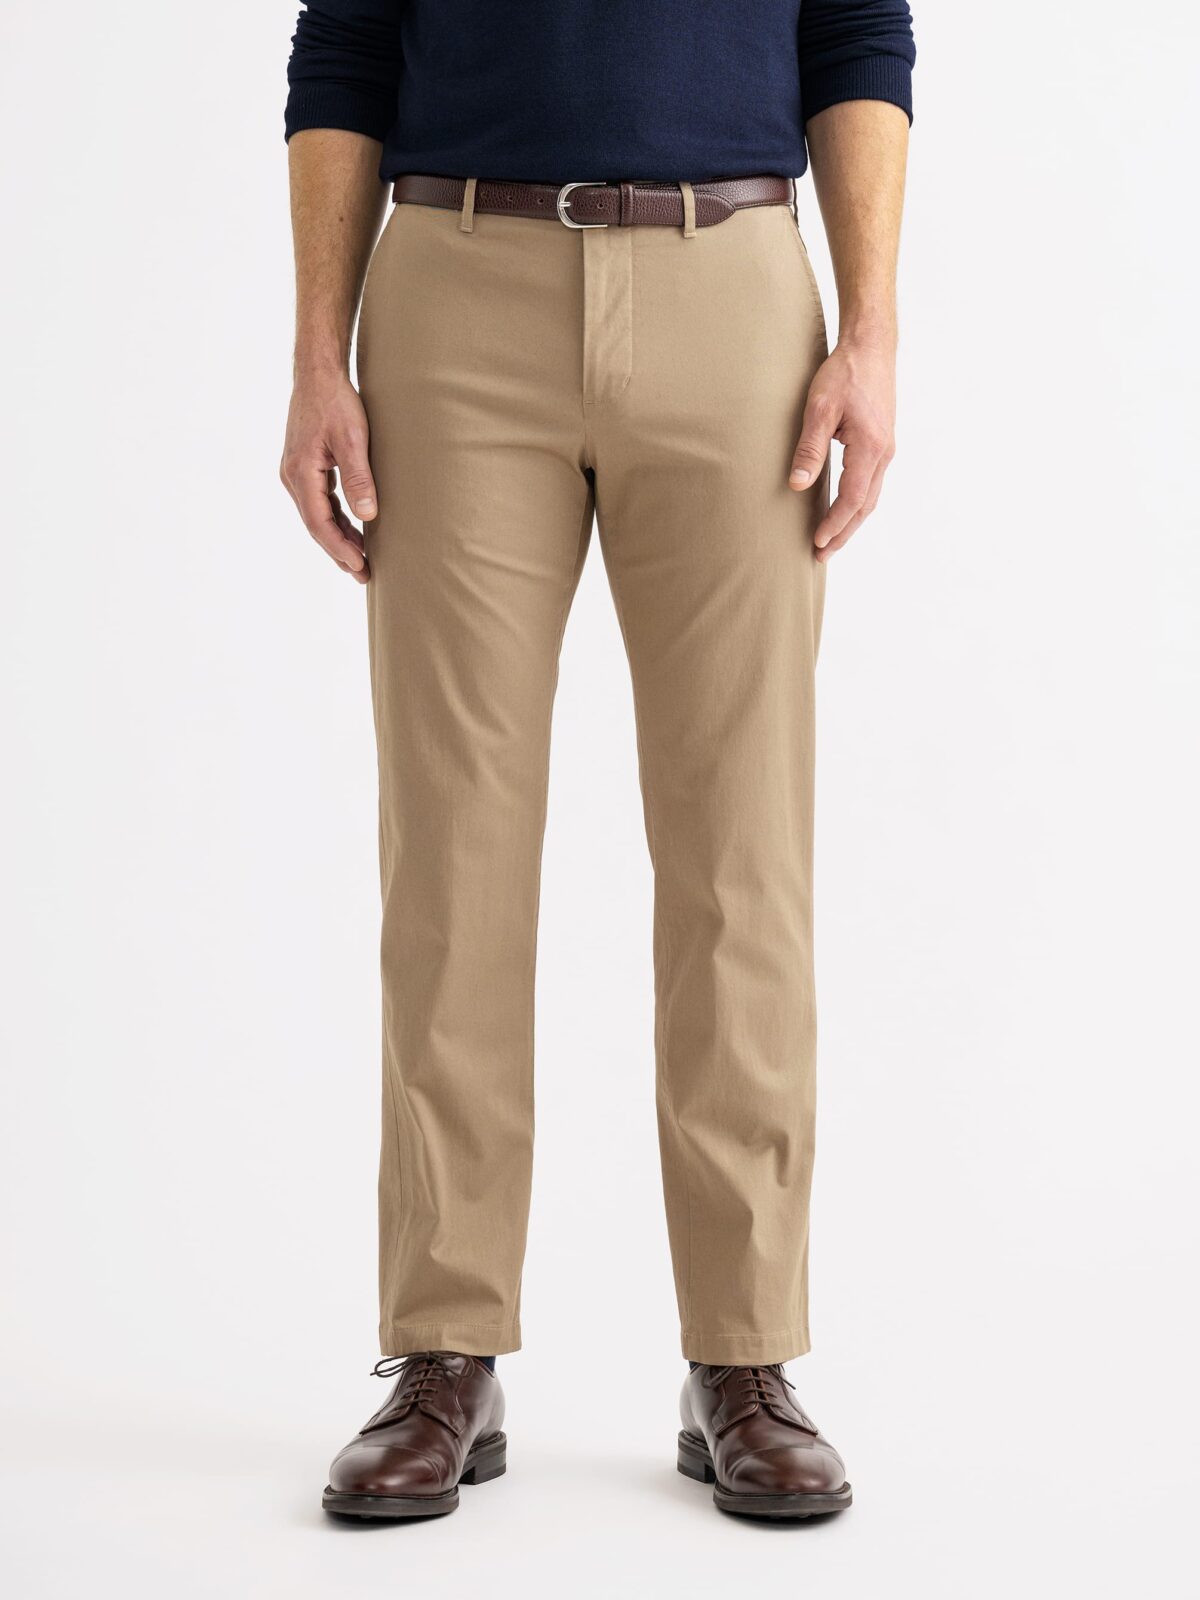 Di Sondrio Khaki Stretch Cotton Chino - Custom Fit Pants